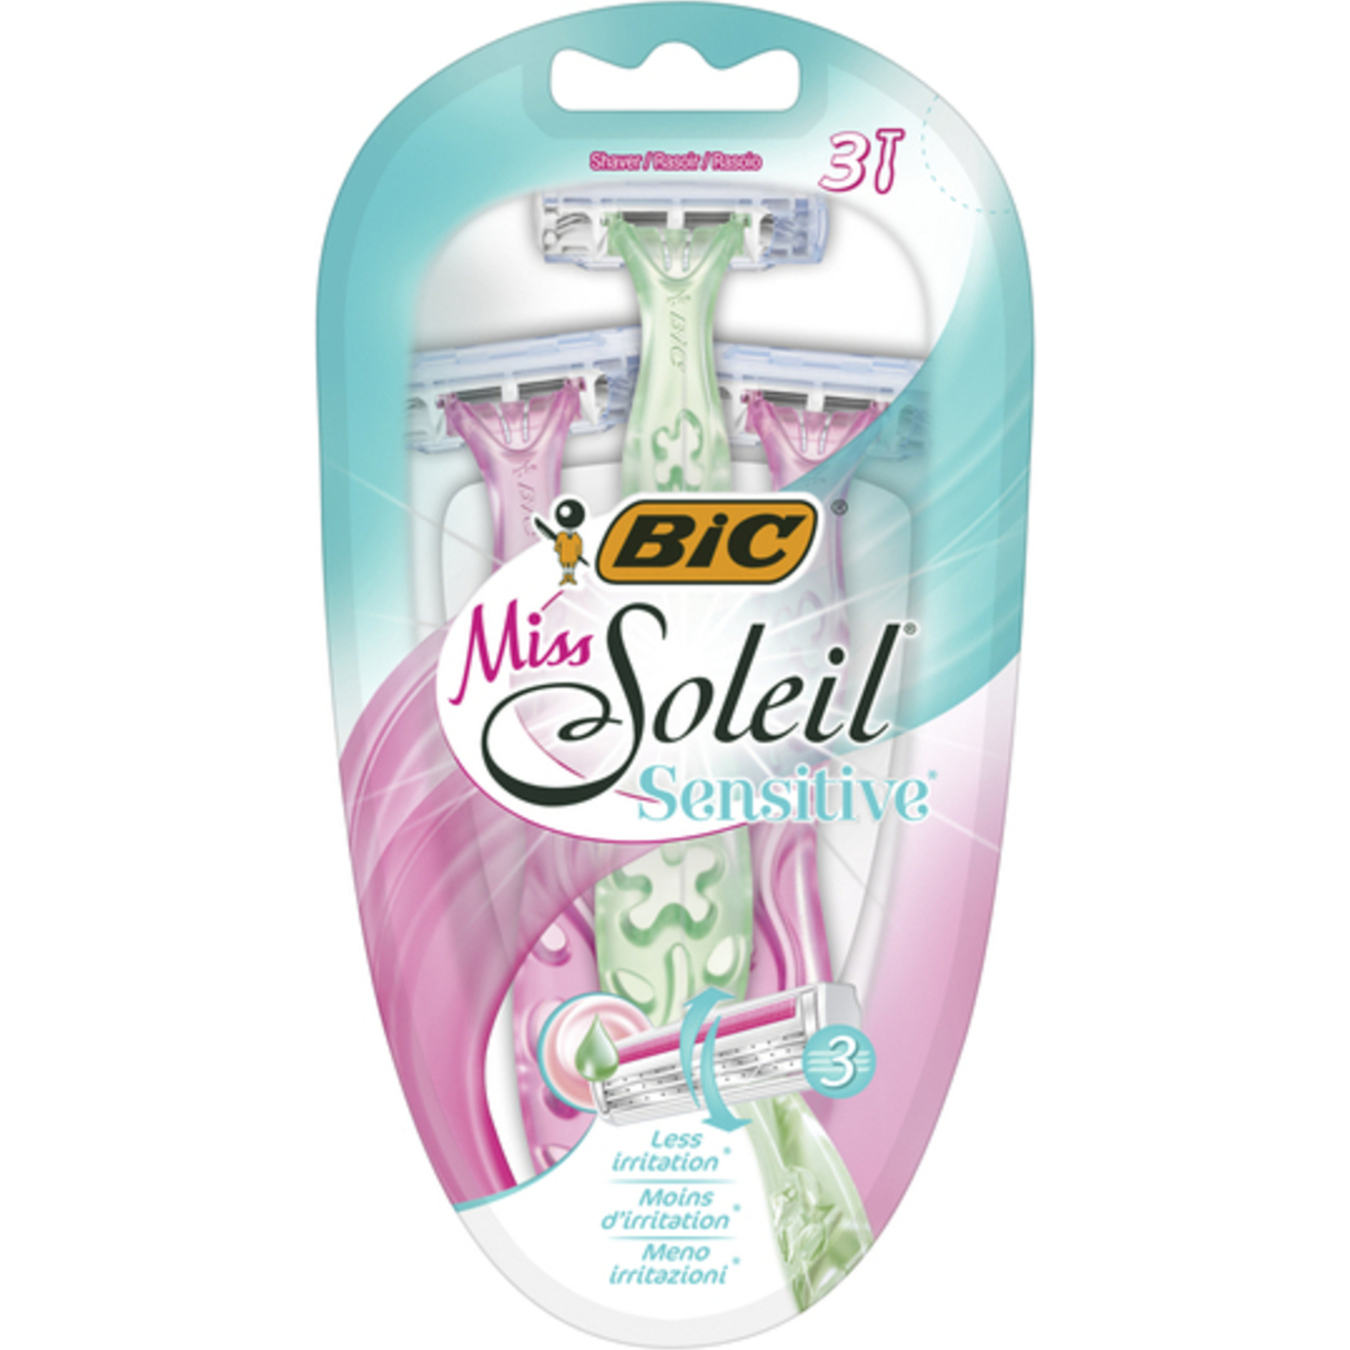 BIC Miss Soleil Sensitive Machine 3pcs